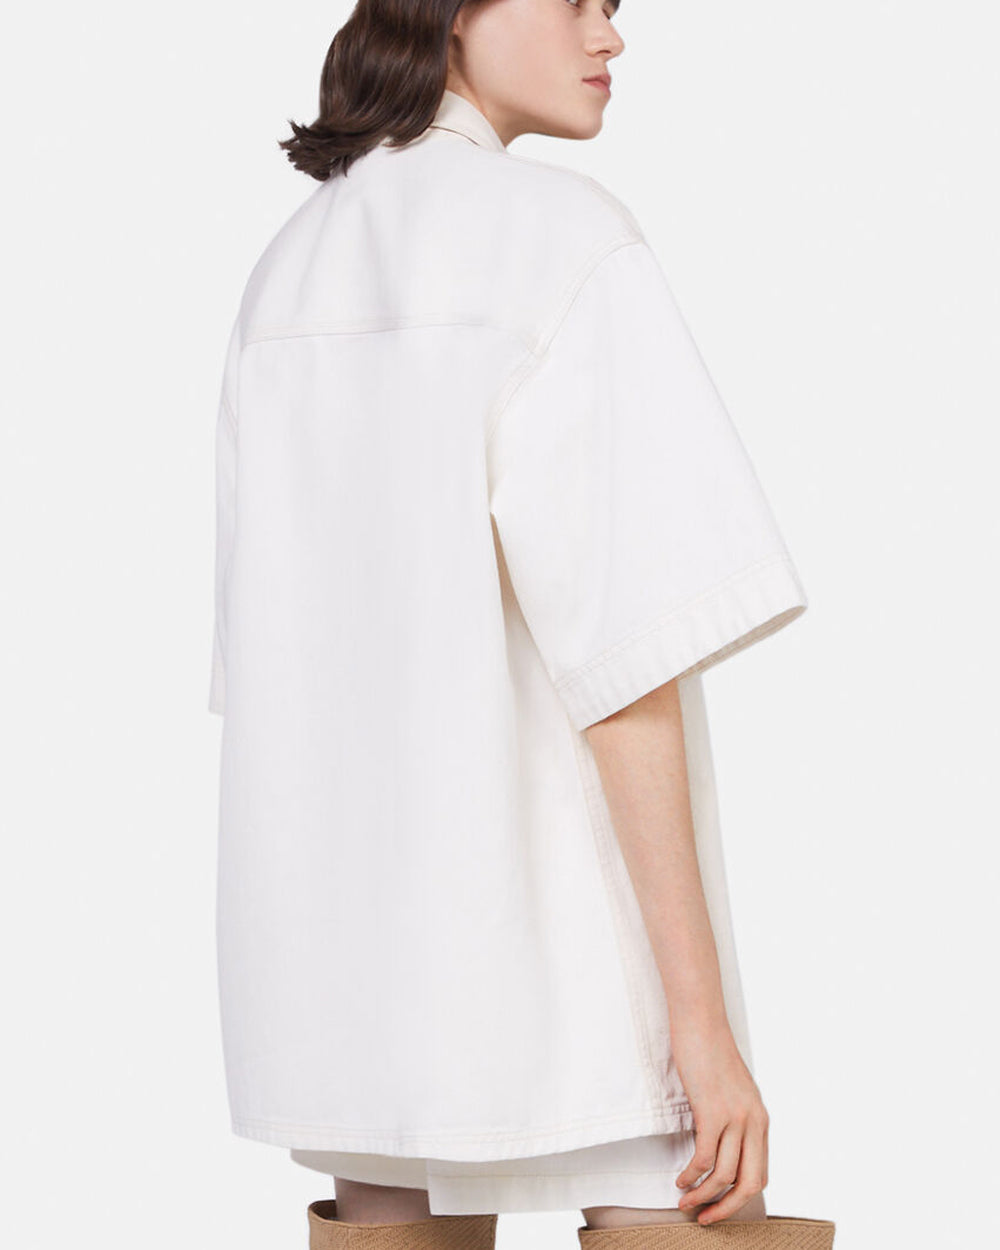 Oversized Denim Shirt in White and Ecru